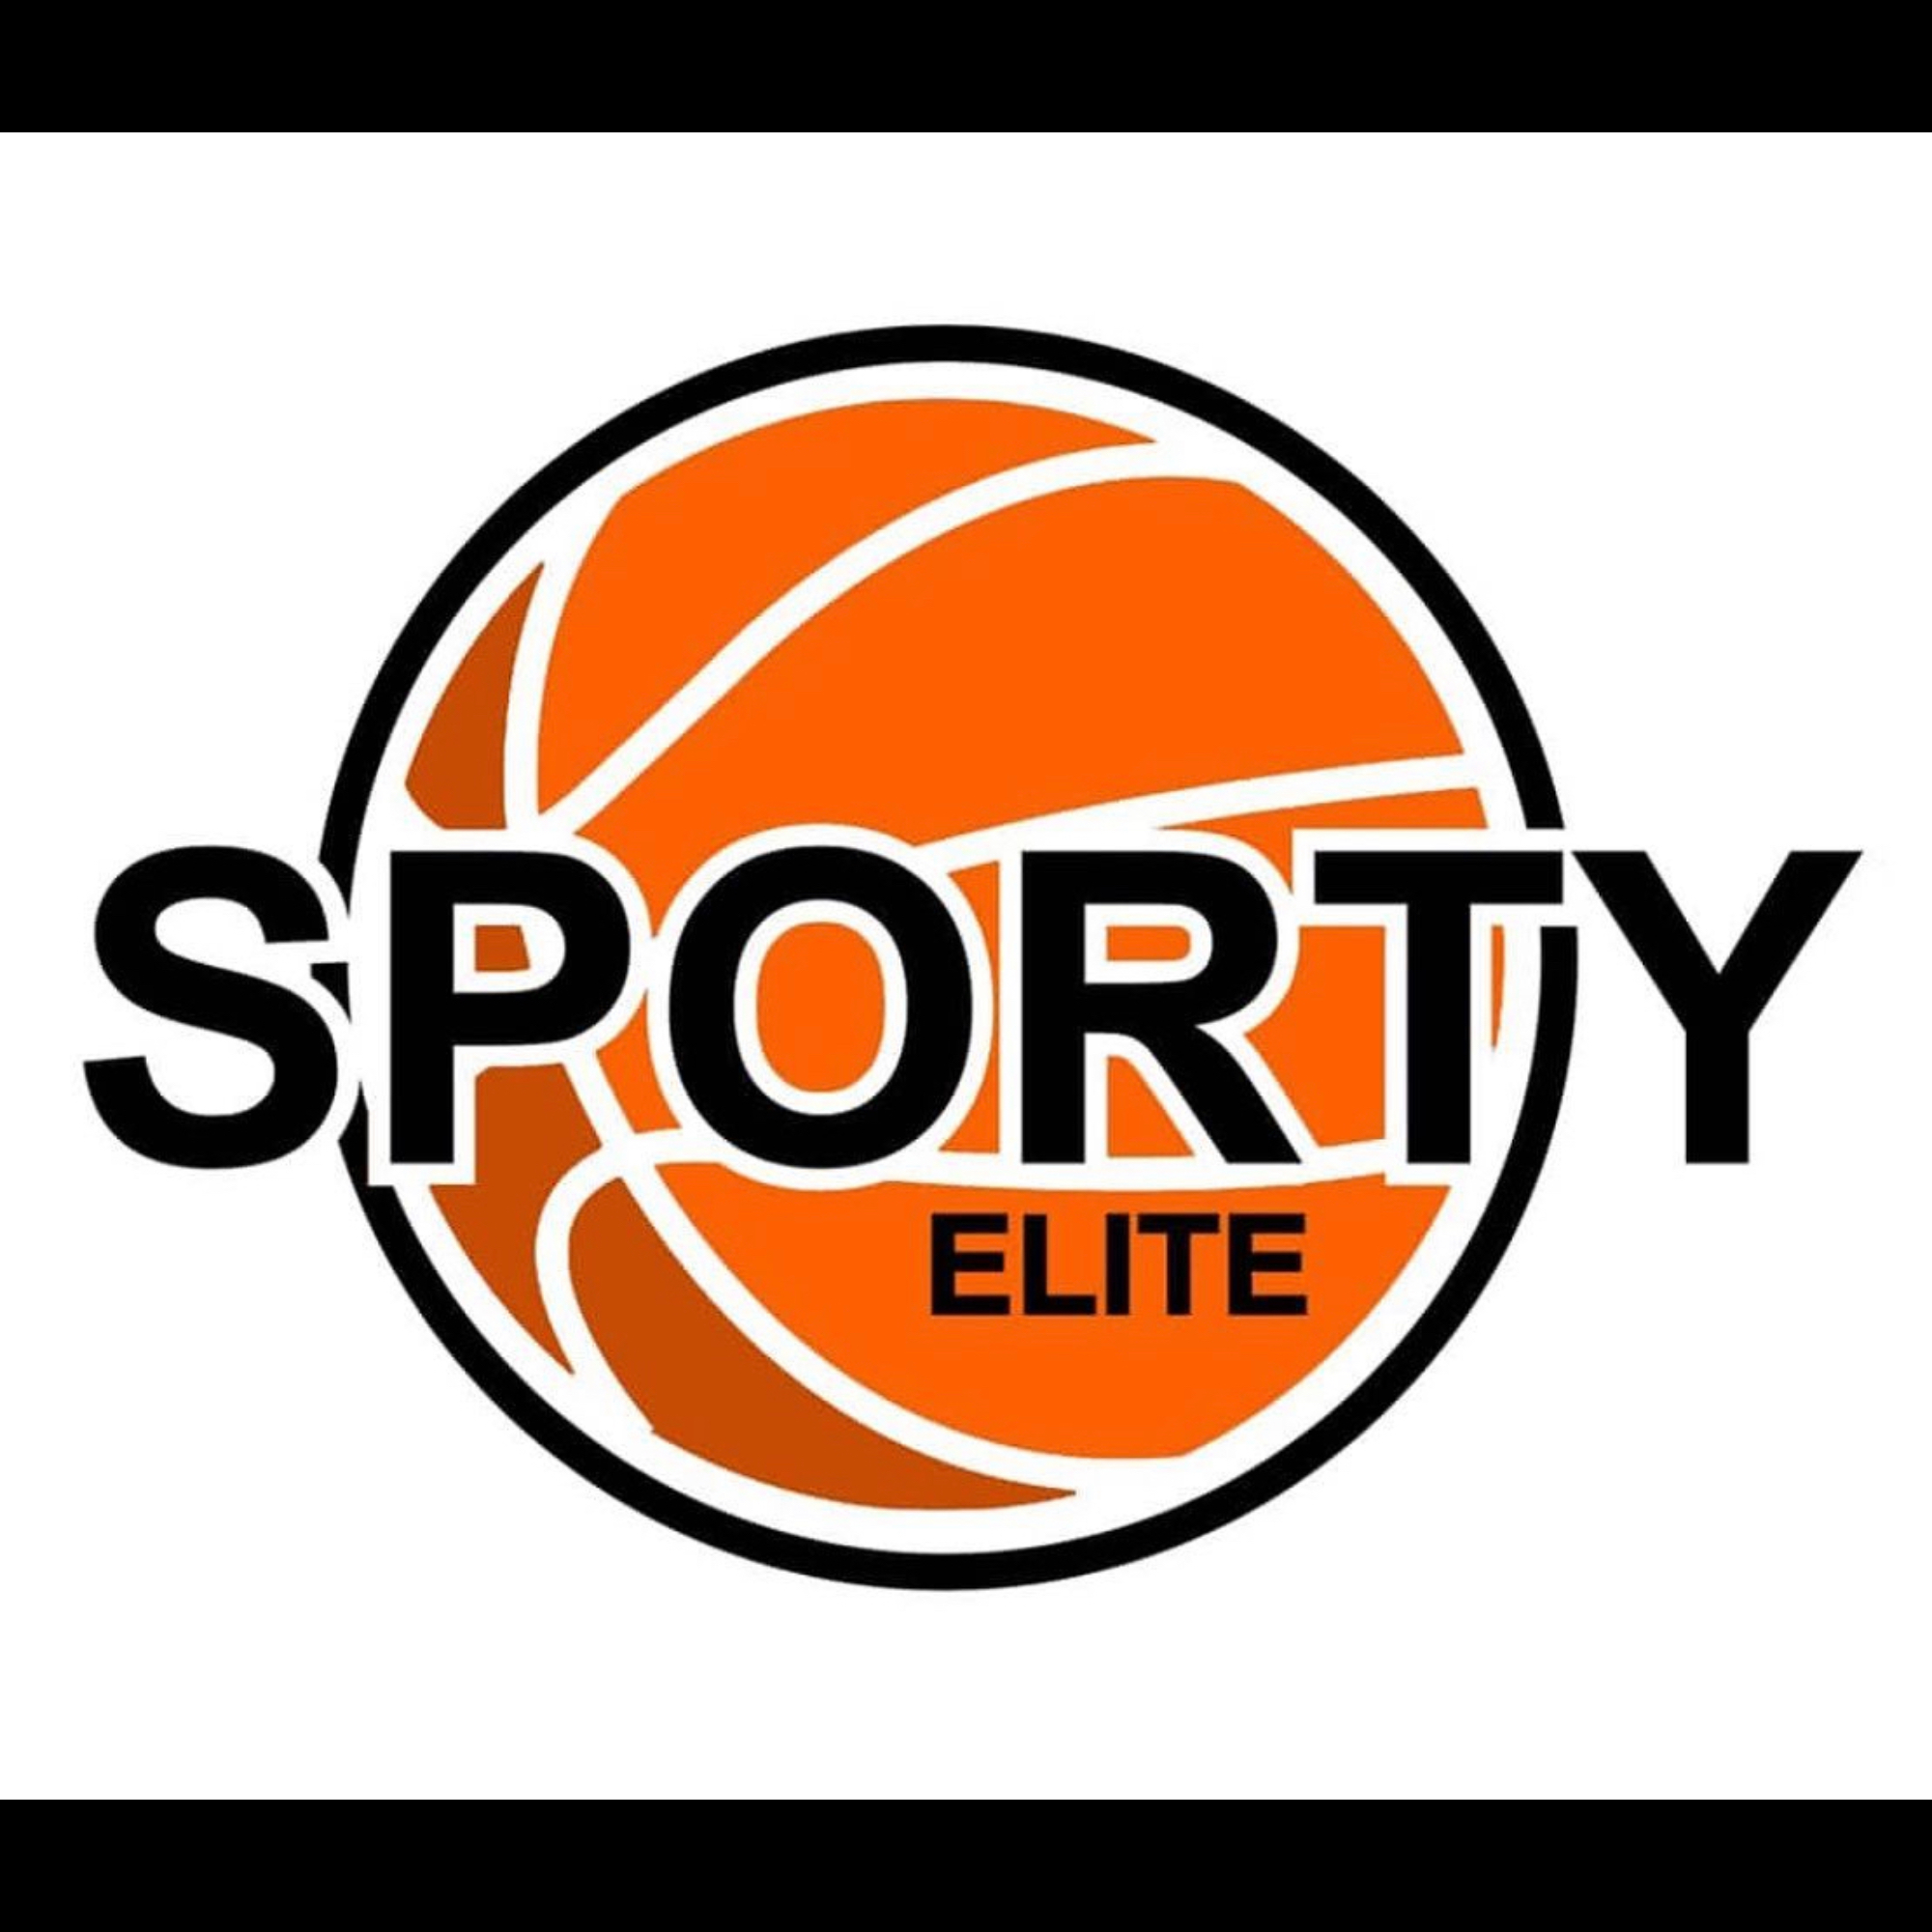 Organization logo for Sporty Elite